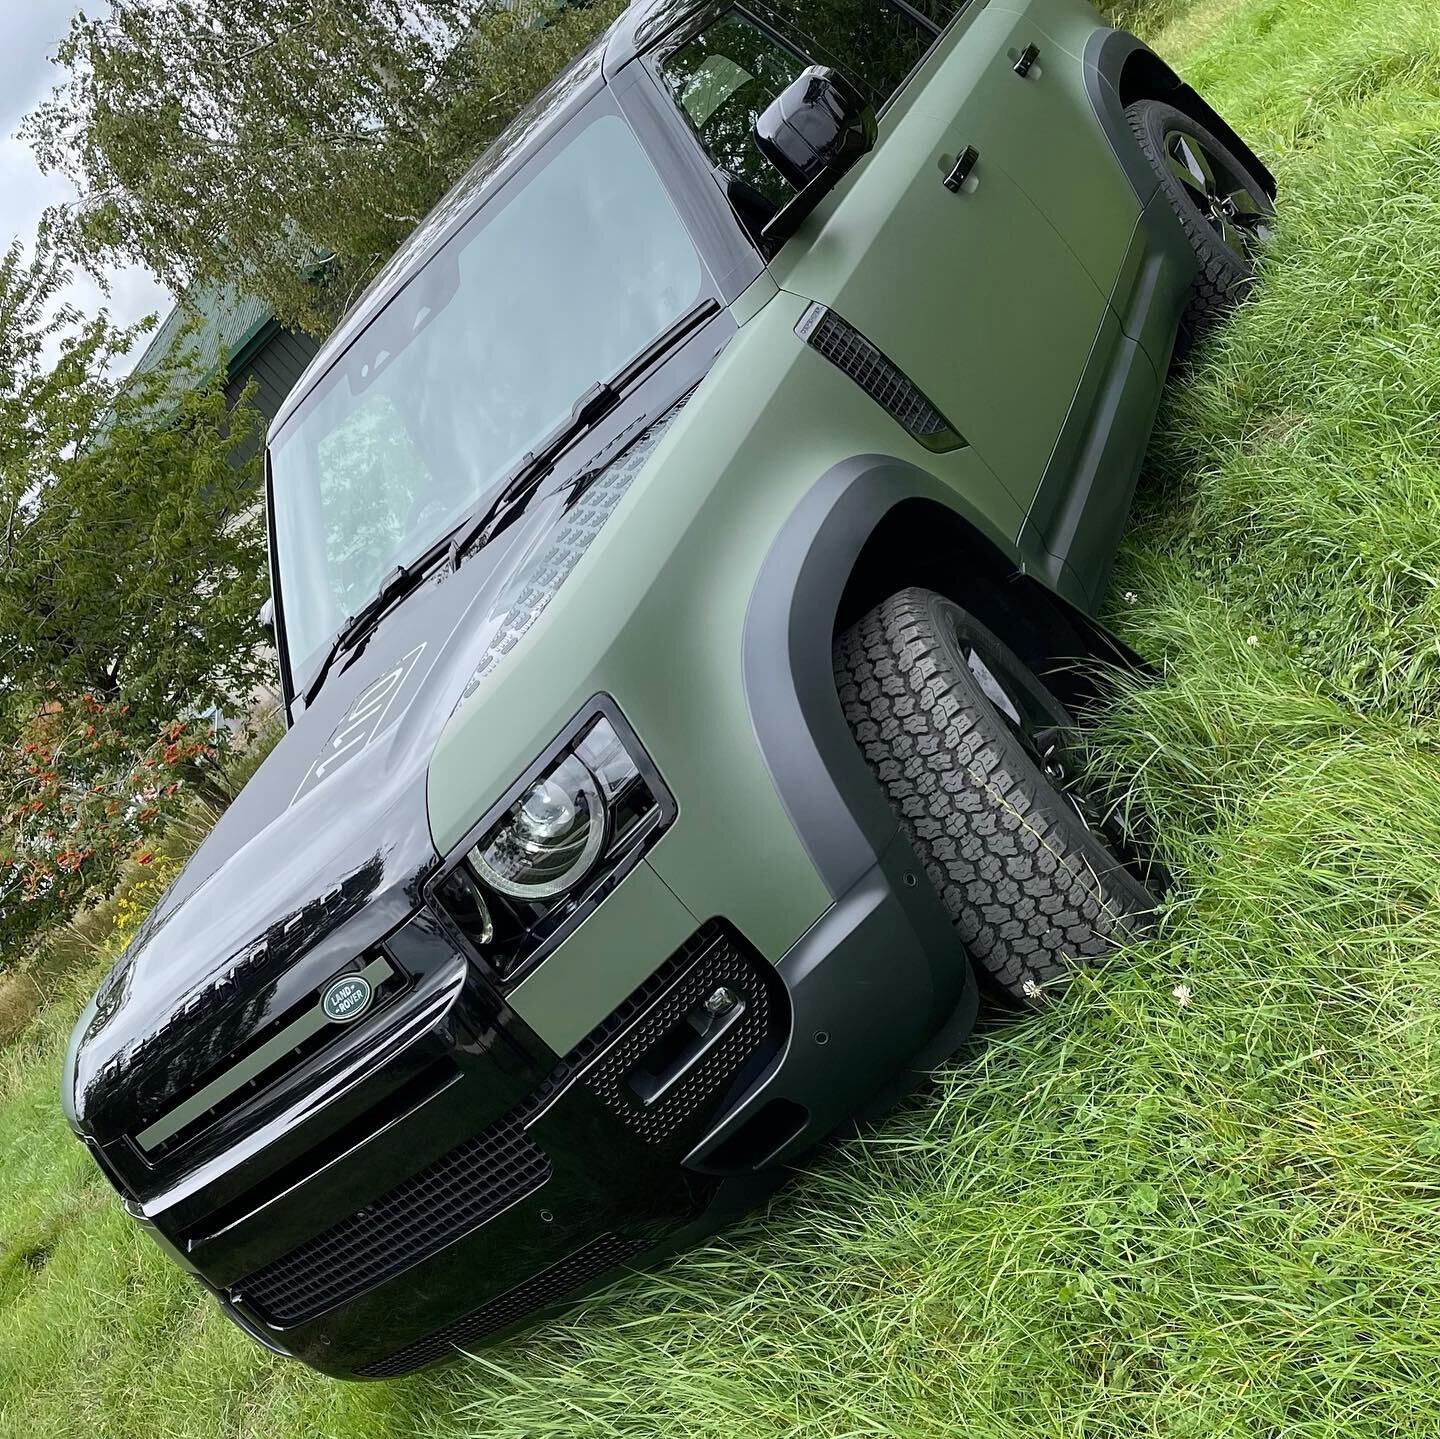 Land Rover Defender #3M matt military green # William Smith # wraps # beast